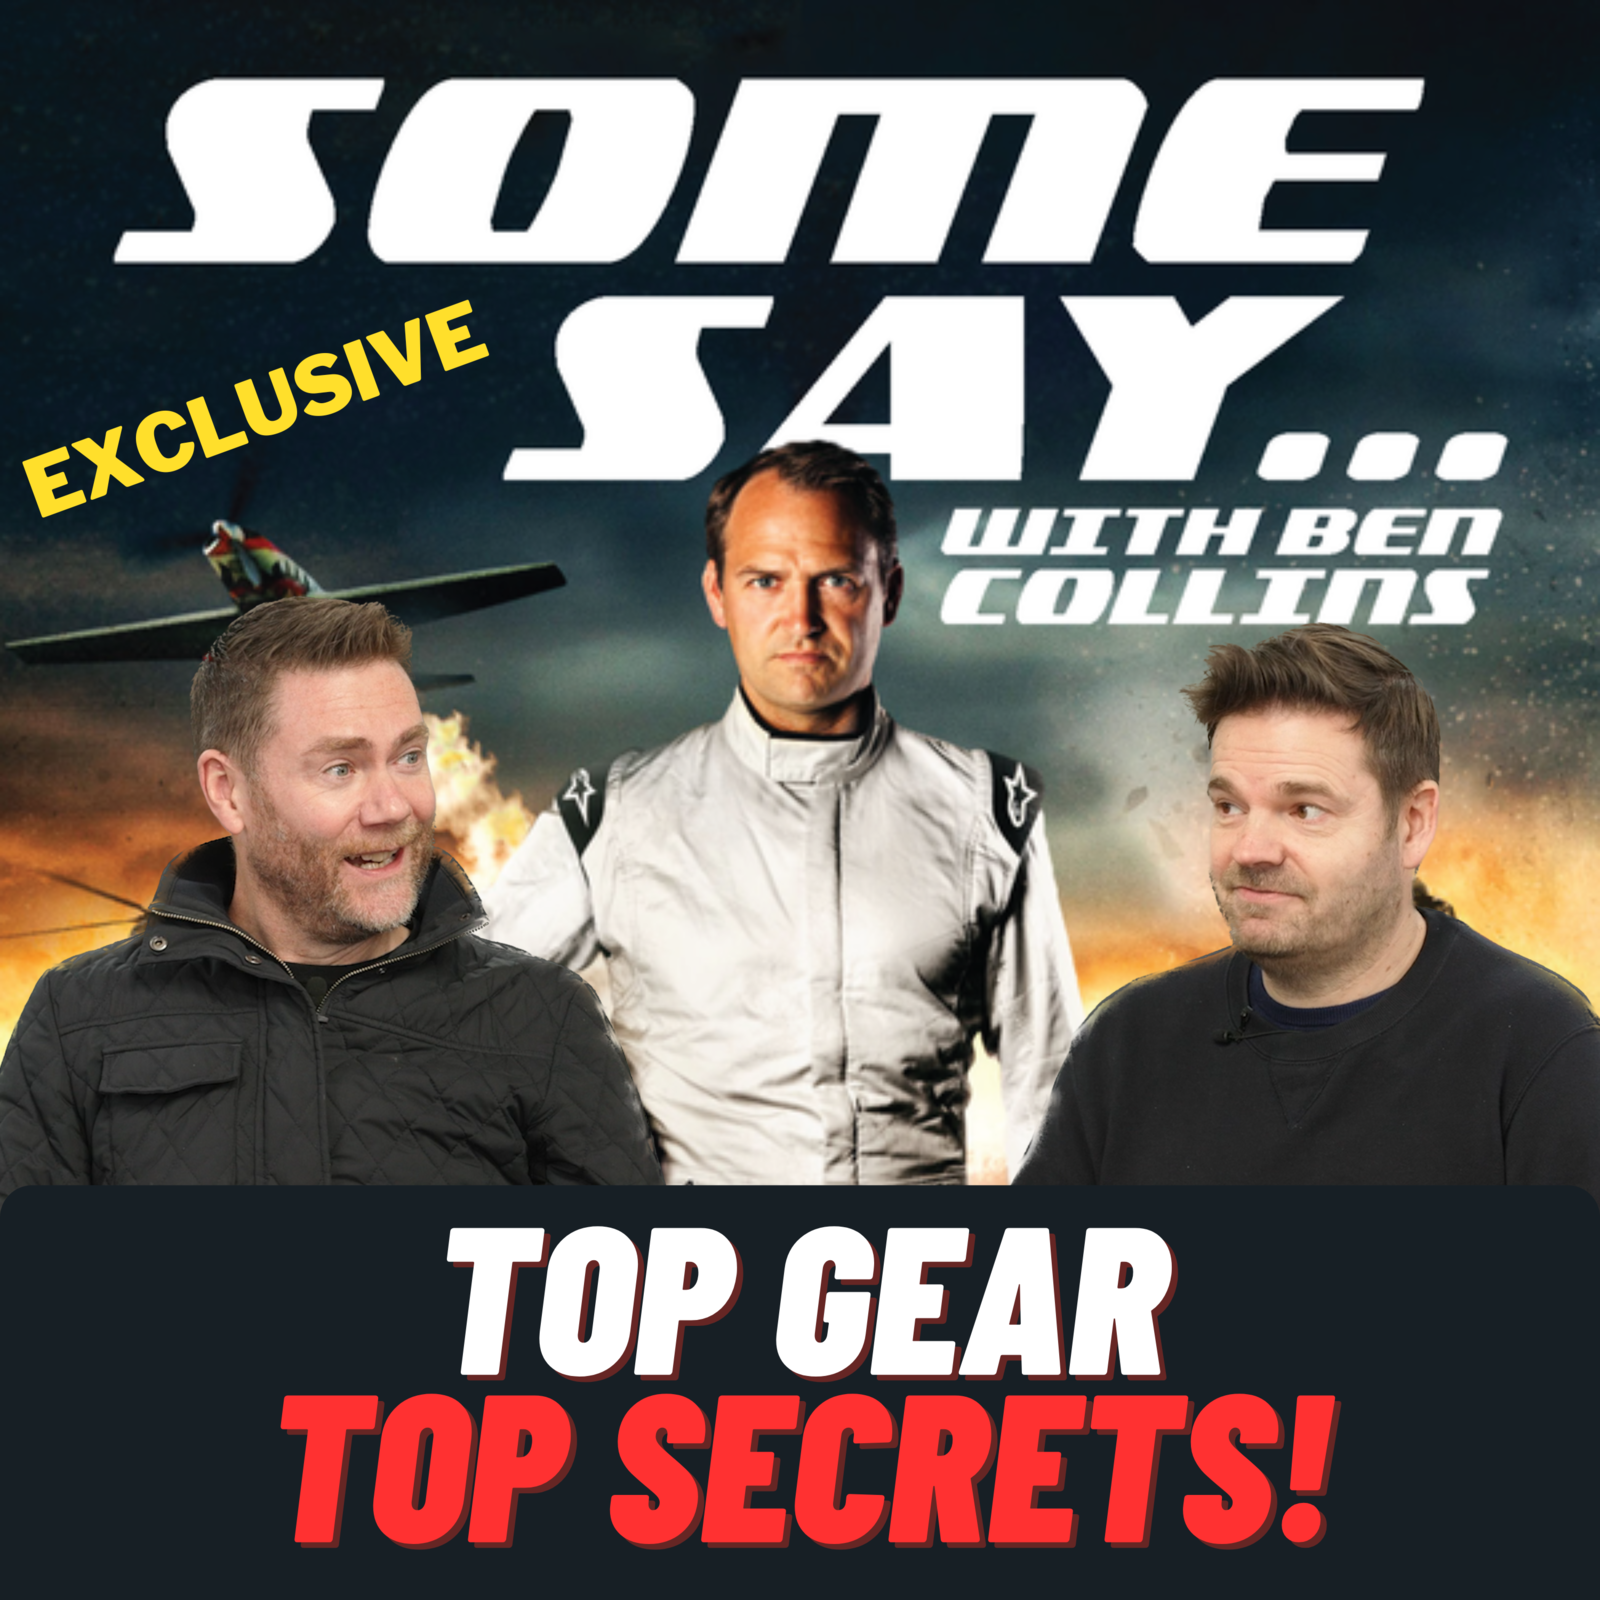 2: Top Gear, Top Secrets